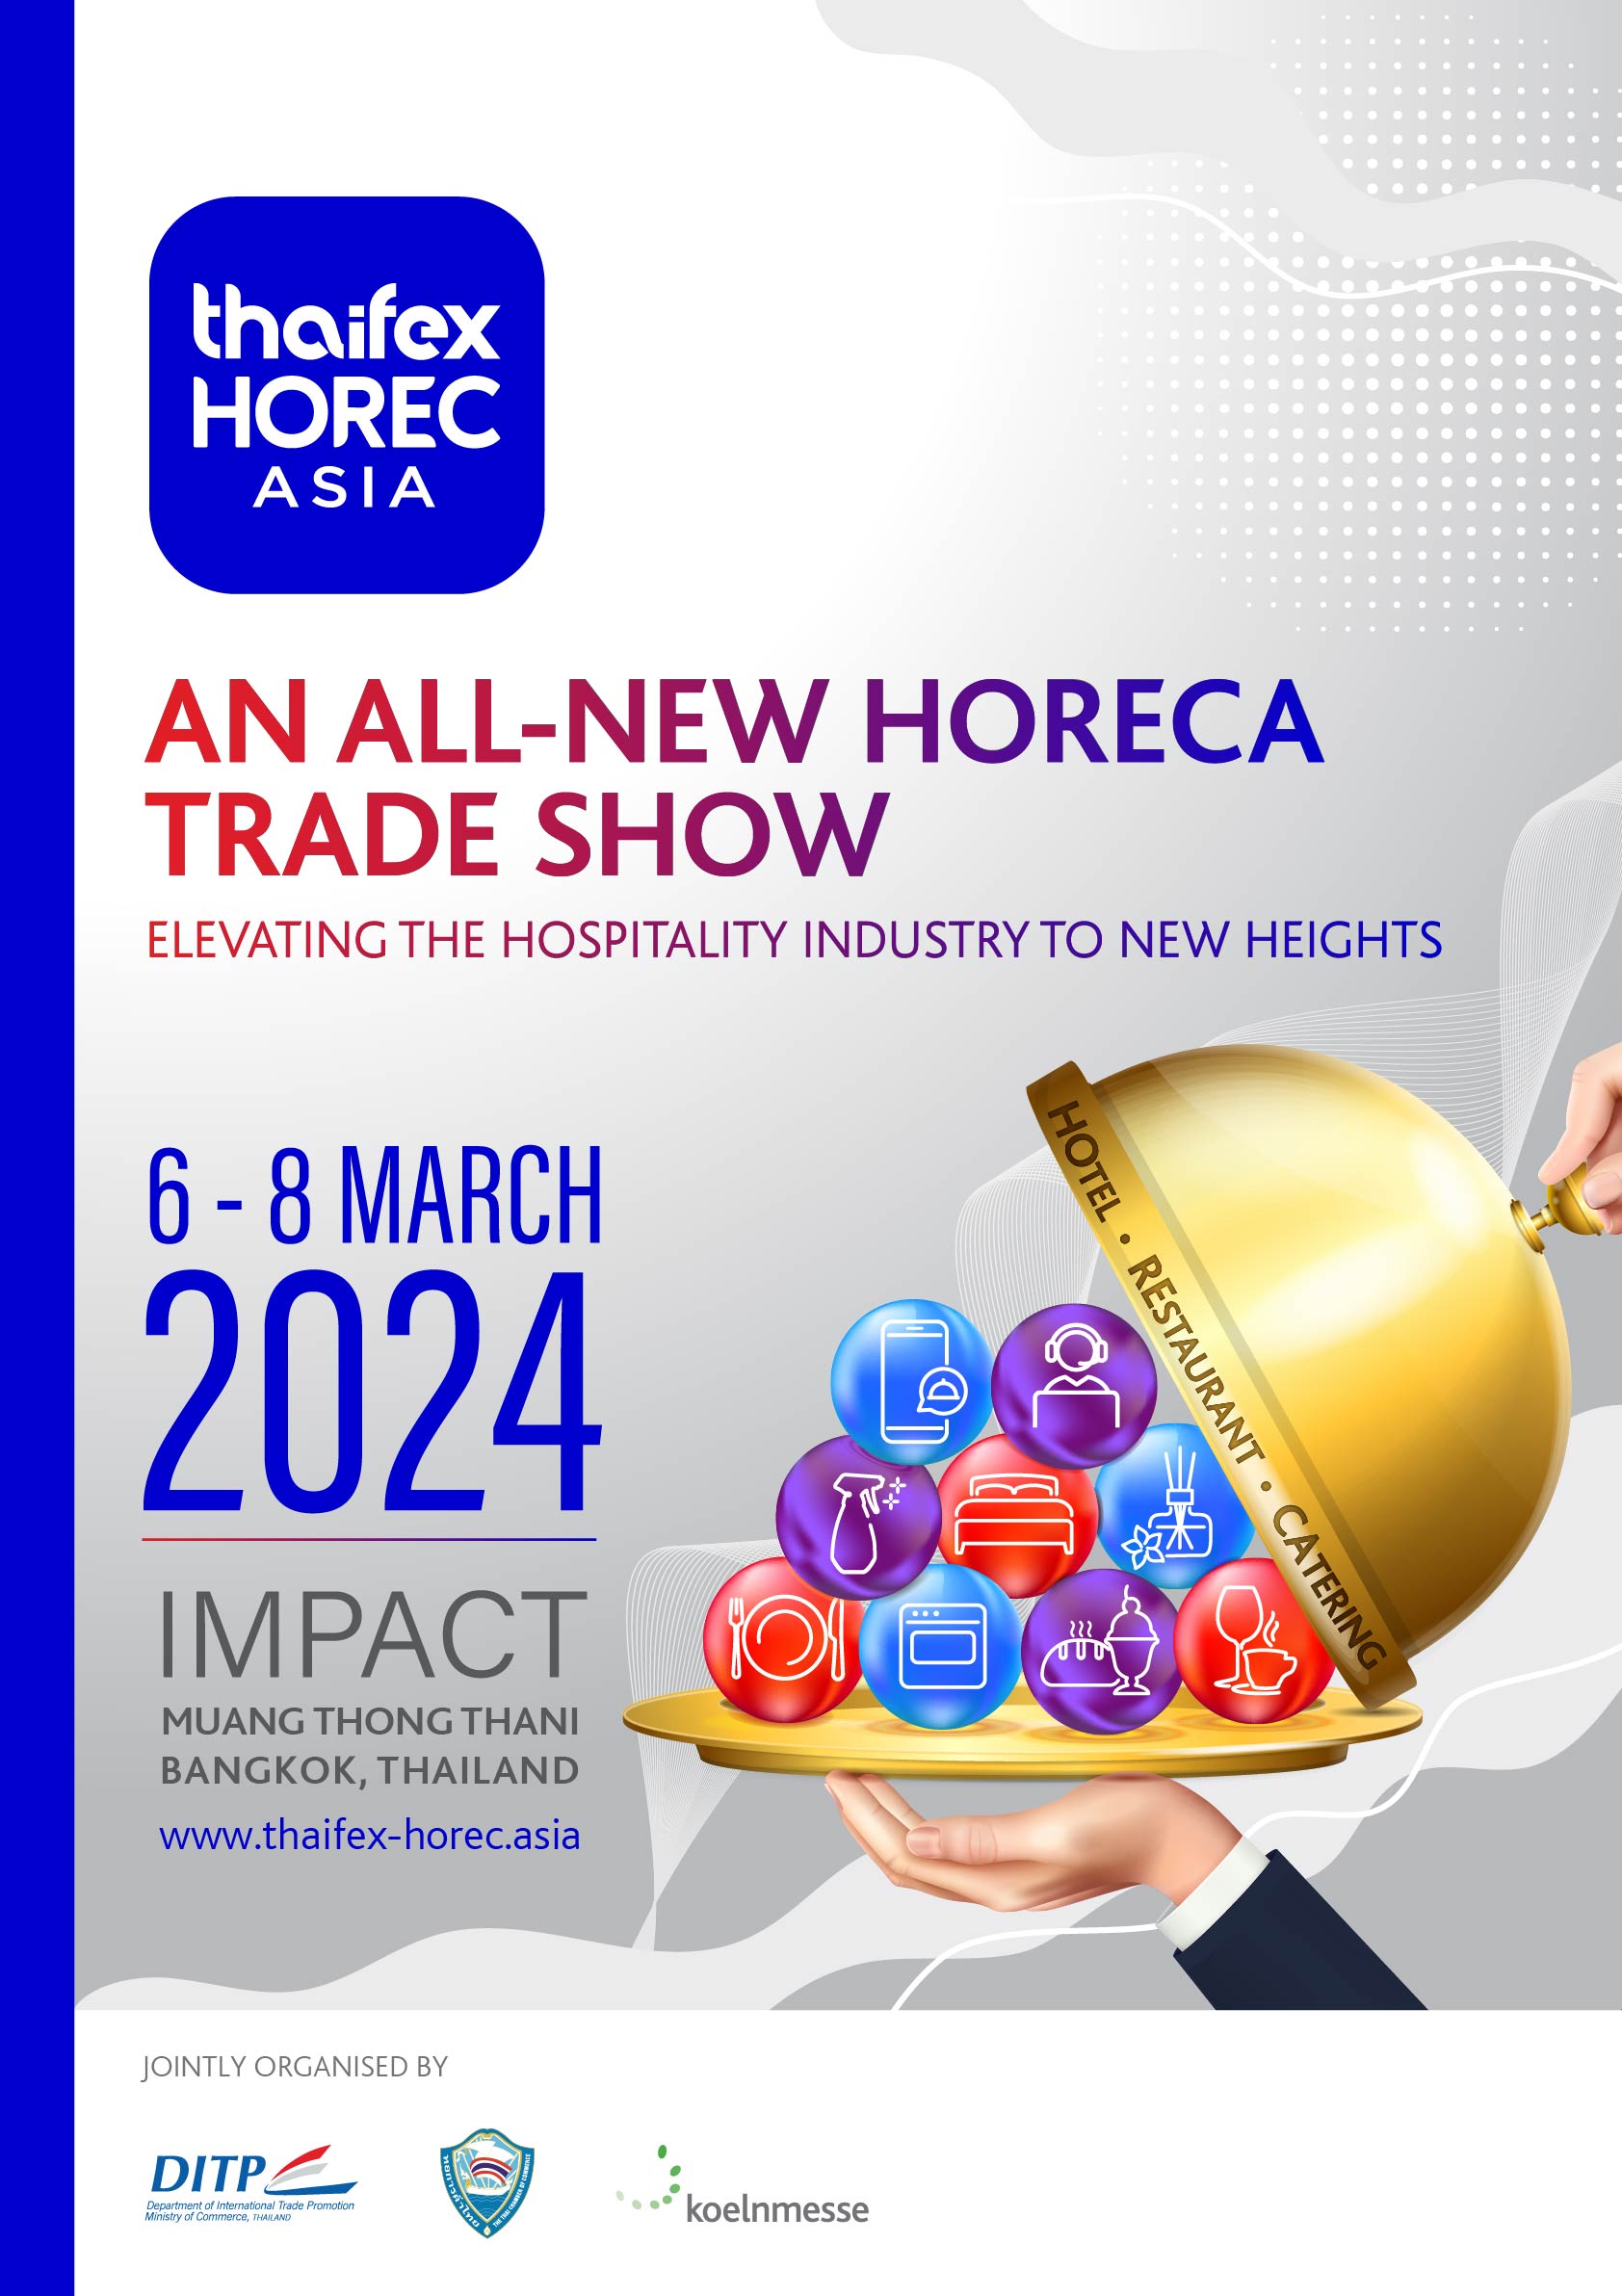 THAIFEX – HOREC Asia และ Asset World Corporation ประกาศความร่วมมือครั้งสำคัญ สร้างมิติใหม่ในอุตสาหกรรม HORECA